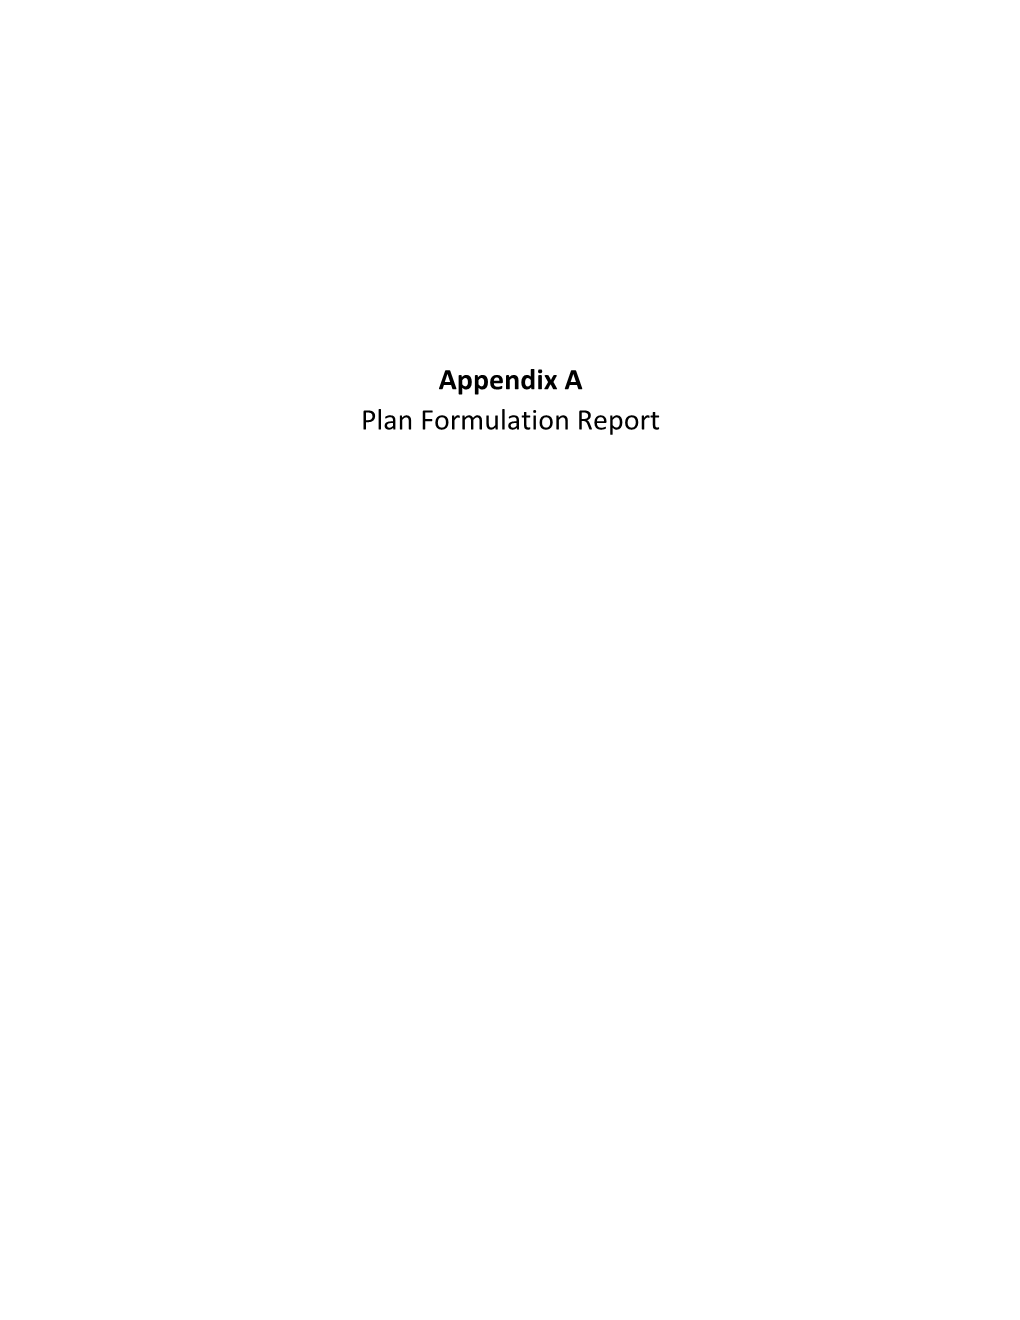 Appendix a Plan Formulation Report